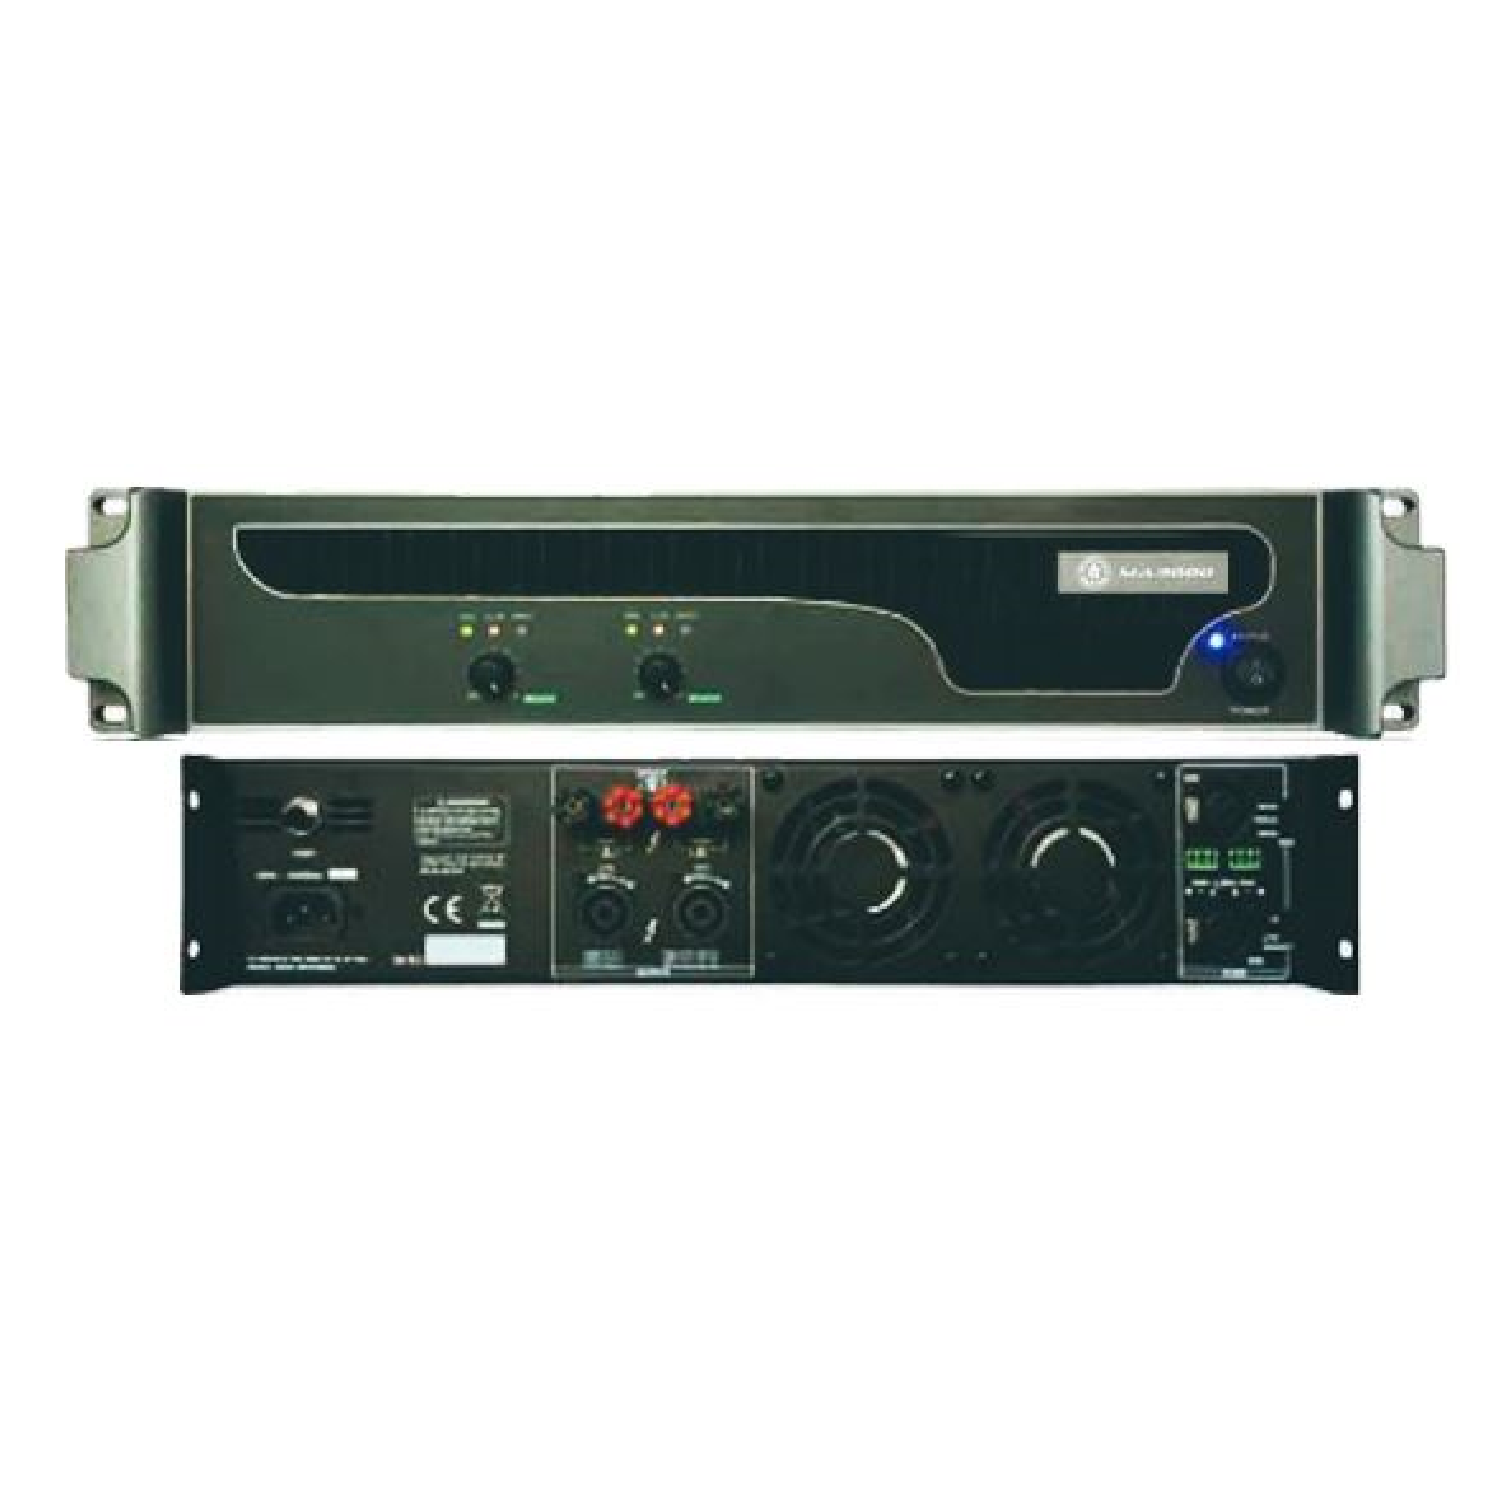 Power Amplifier 4 Ohms Stereo: 1200 Watts, 8 Ohms Stereo: 800 Watts, 8 Ohms Bridge Mono: 1700 Watts   MA 3000 topp pro